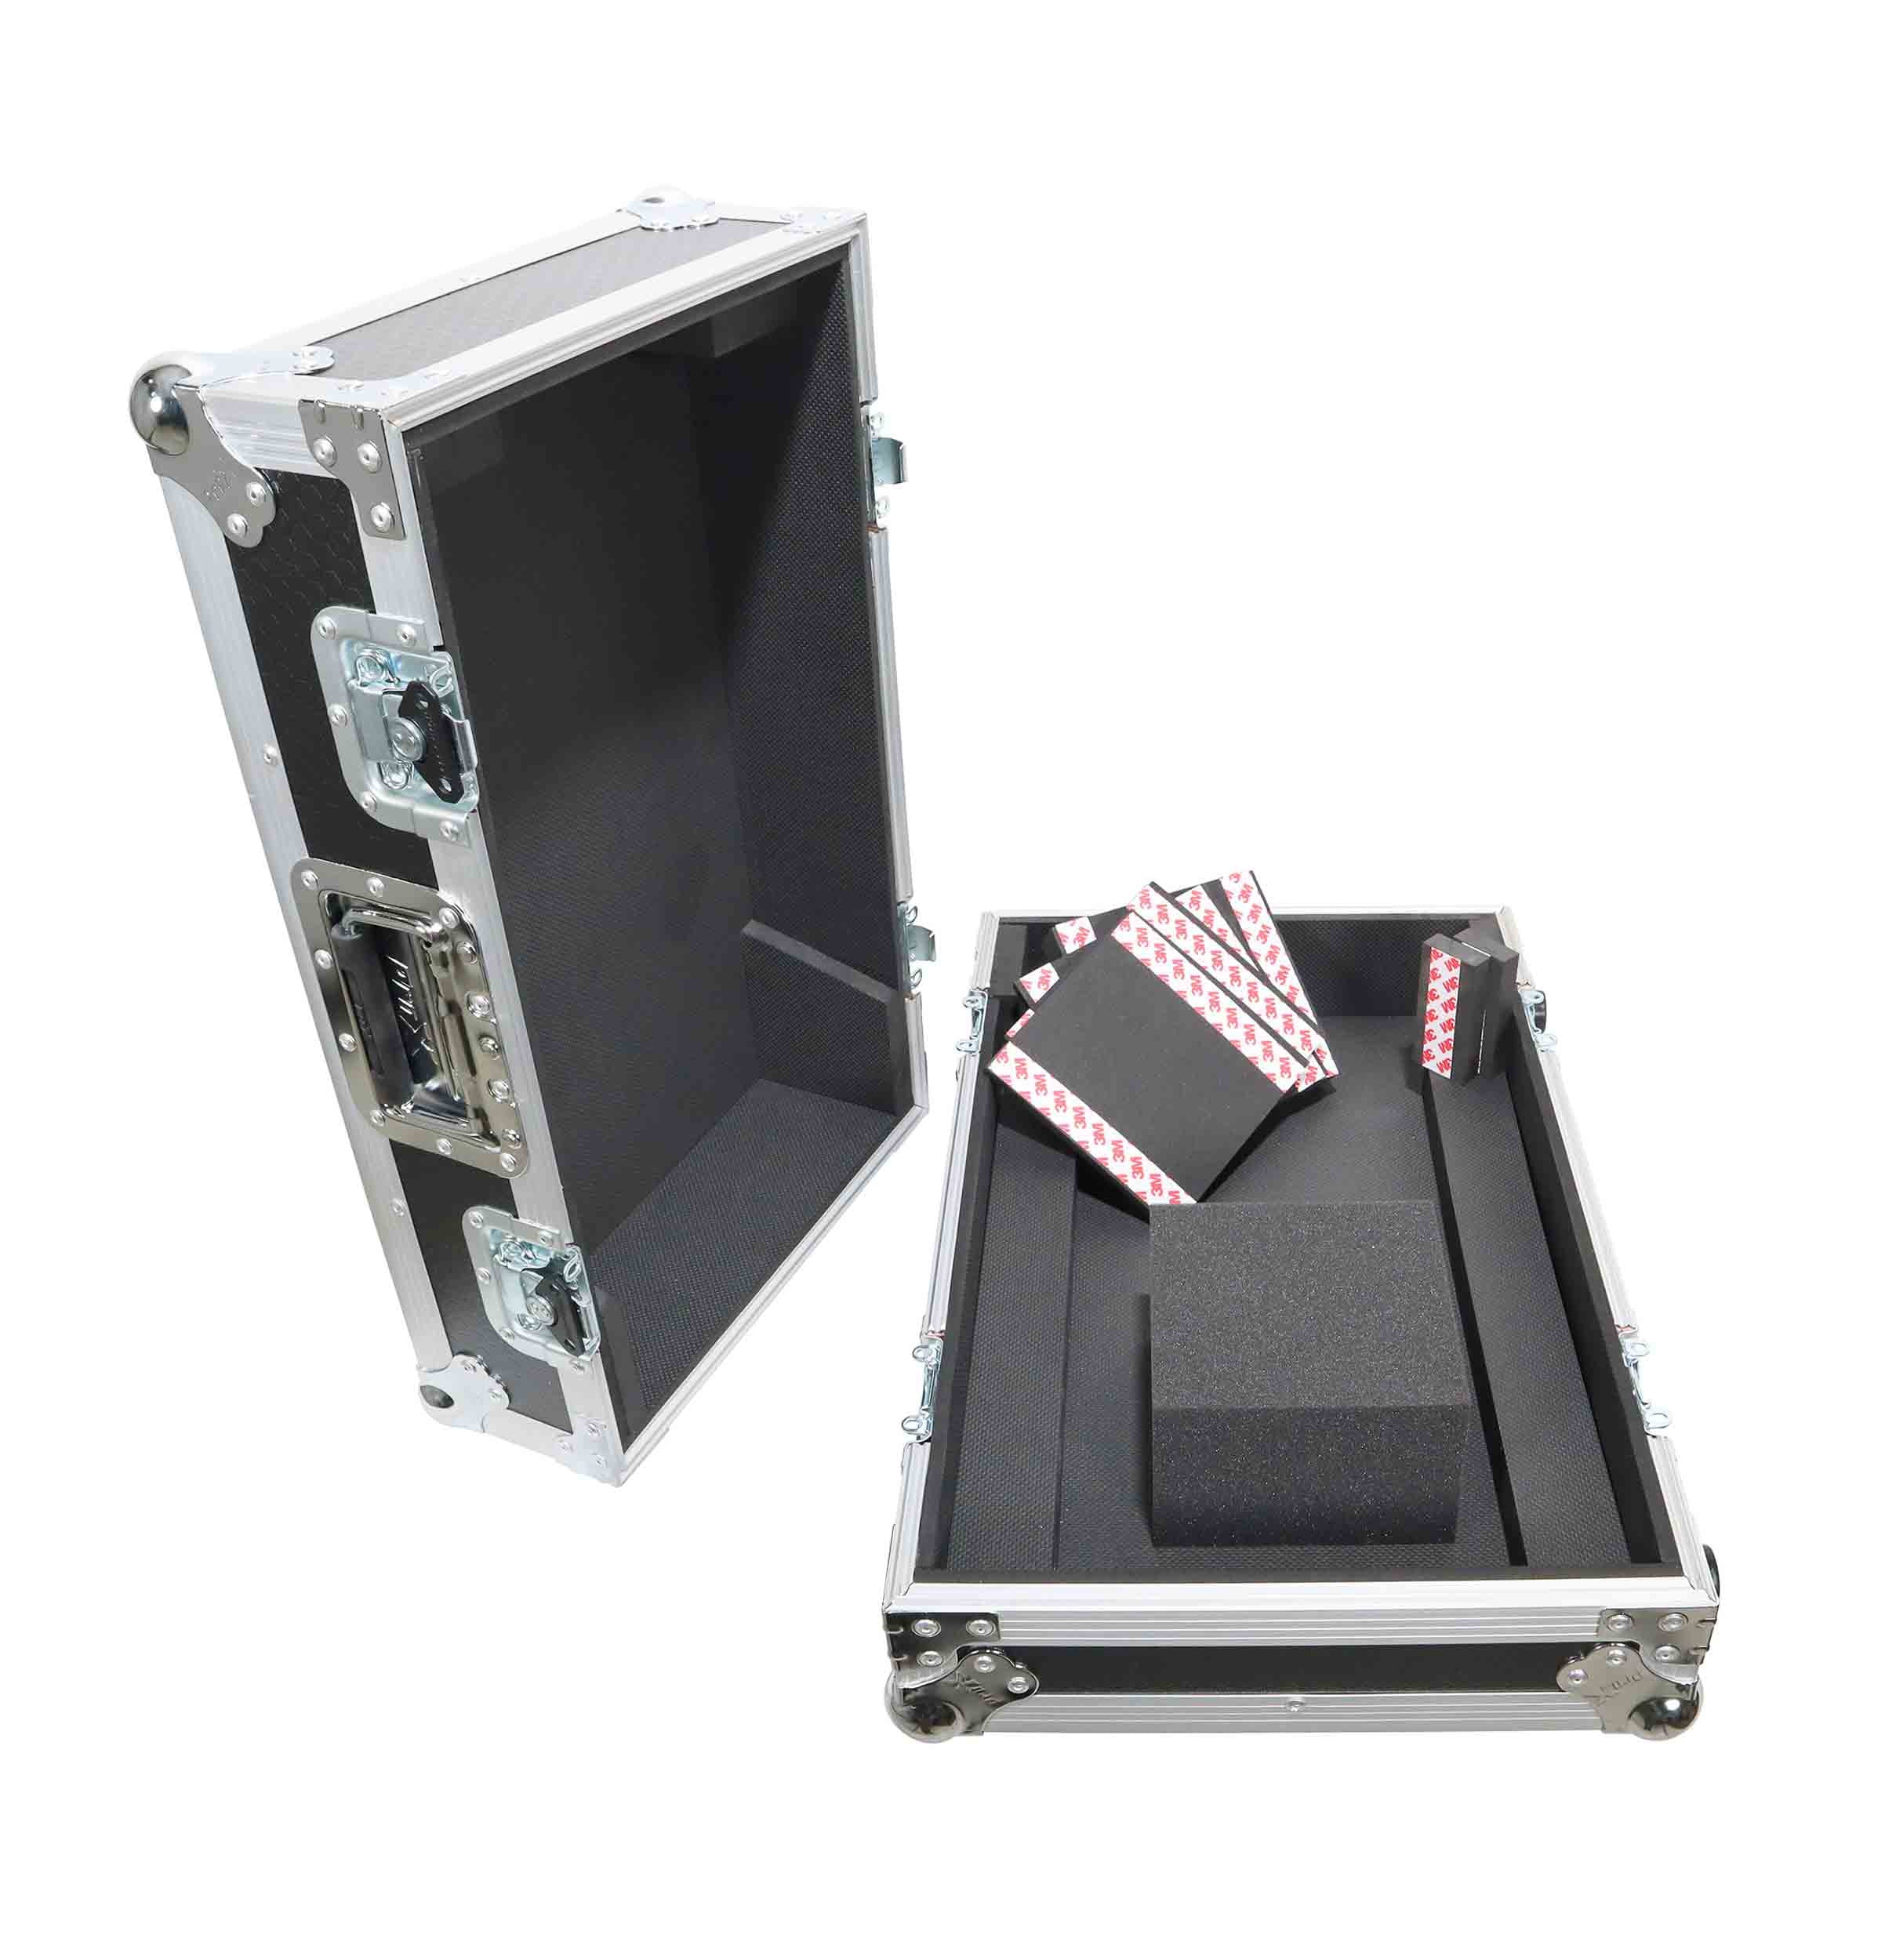 ProX XS-YDM3MDLZ, ATA Flight Case for Yamaha DM3 or Mackie DLZ Digital Audio Mixer Console by ProX Cases